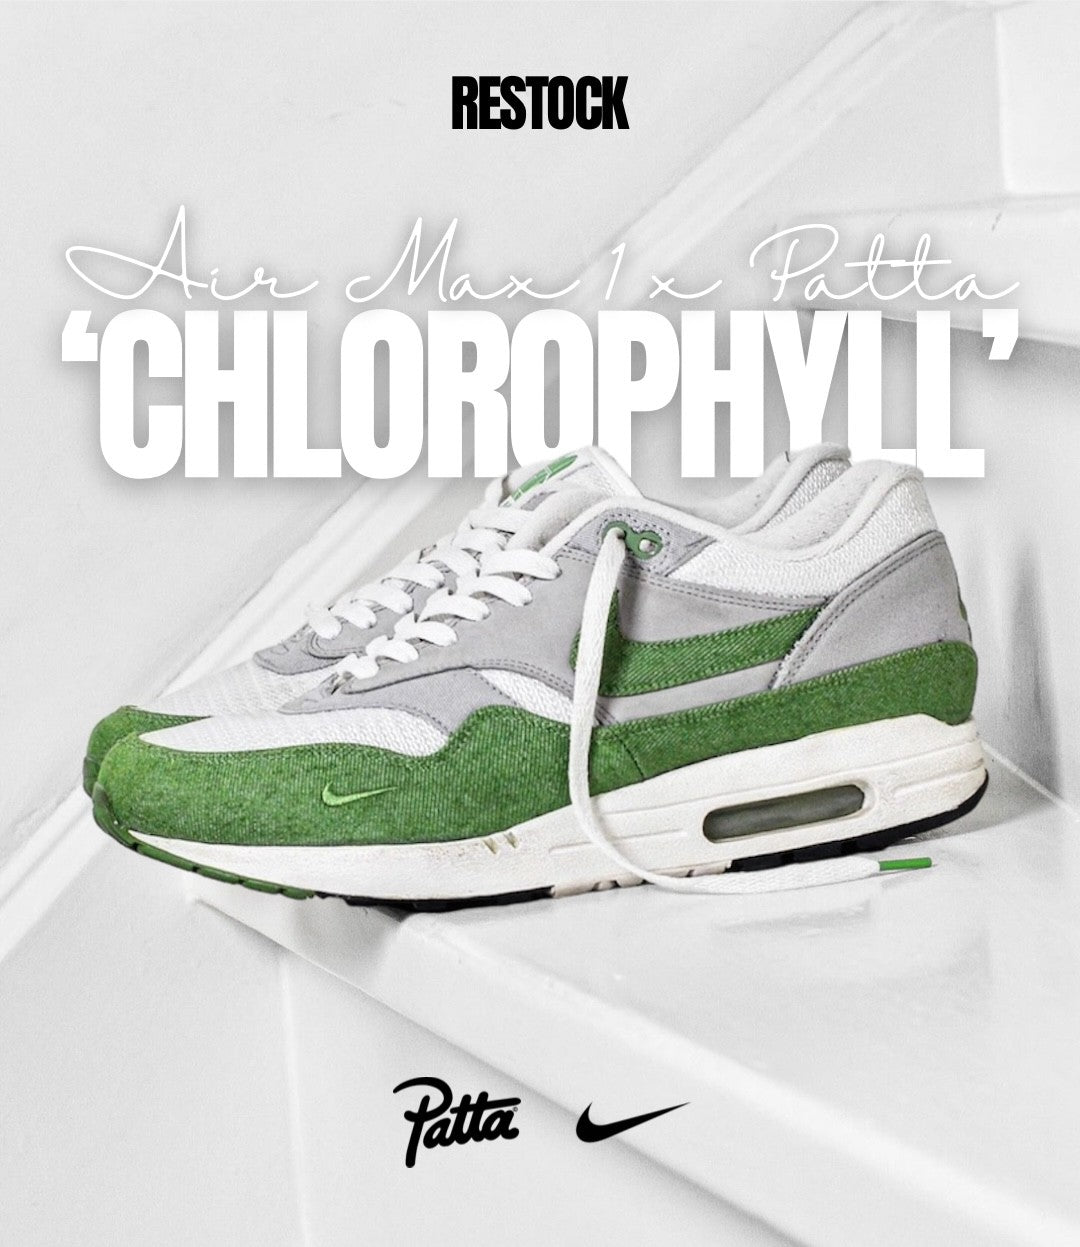 Restock 'Chlorophyll' Patta x Nike Air Max 1